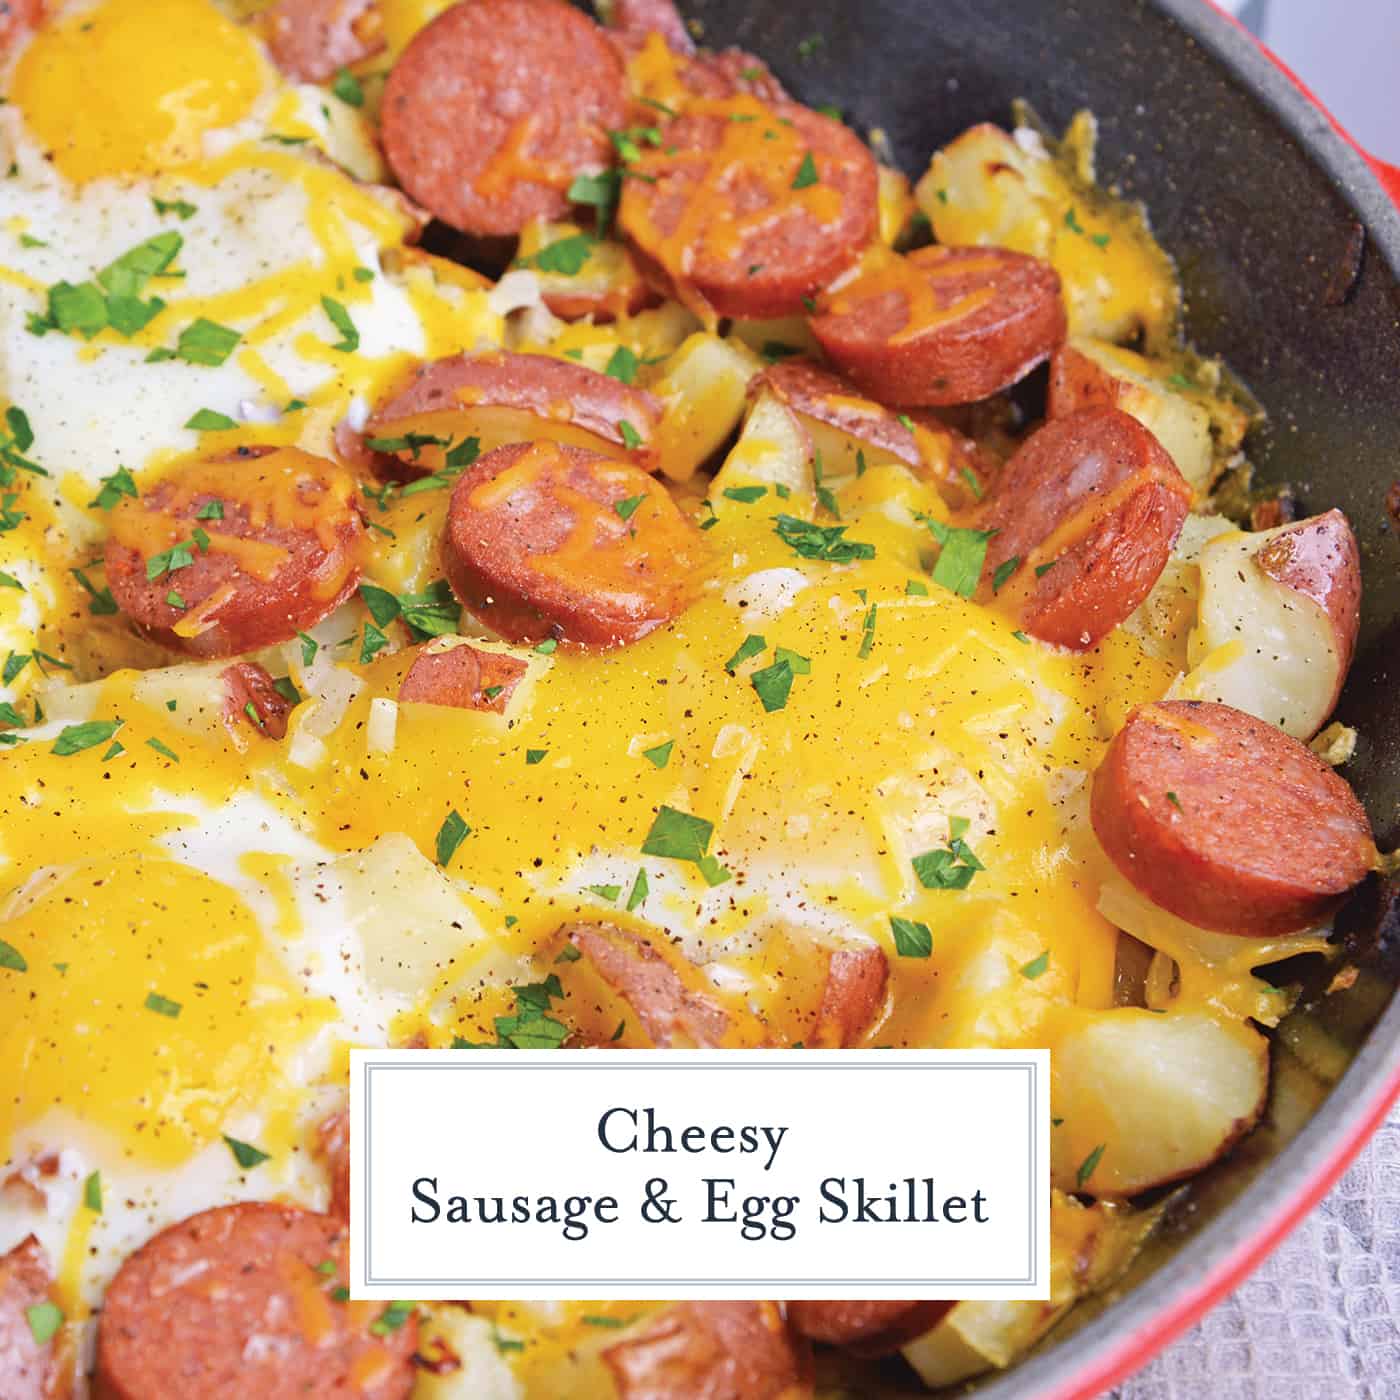 https://www.savoryexperiments.com/wp-content/uploads/2014/03/sausage-and-egg-skillet-FB.jpg